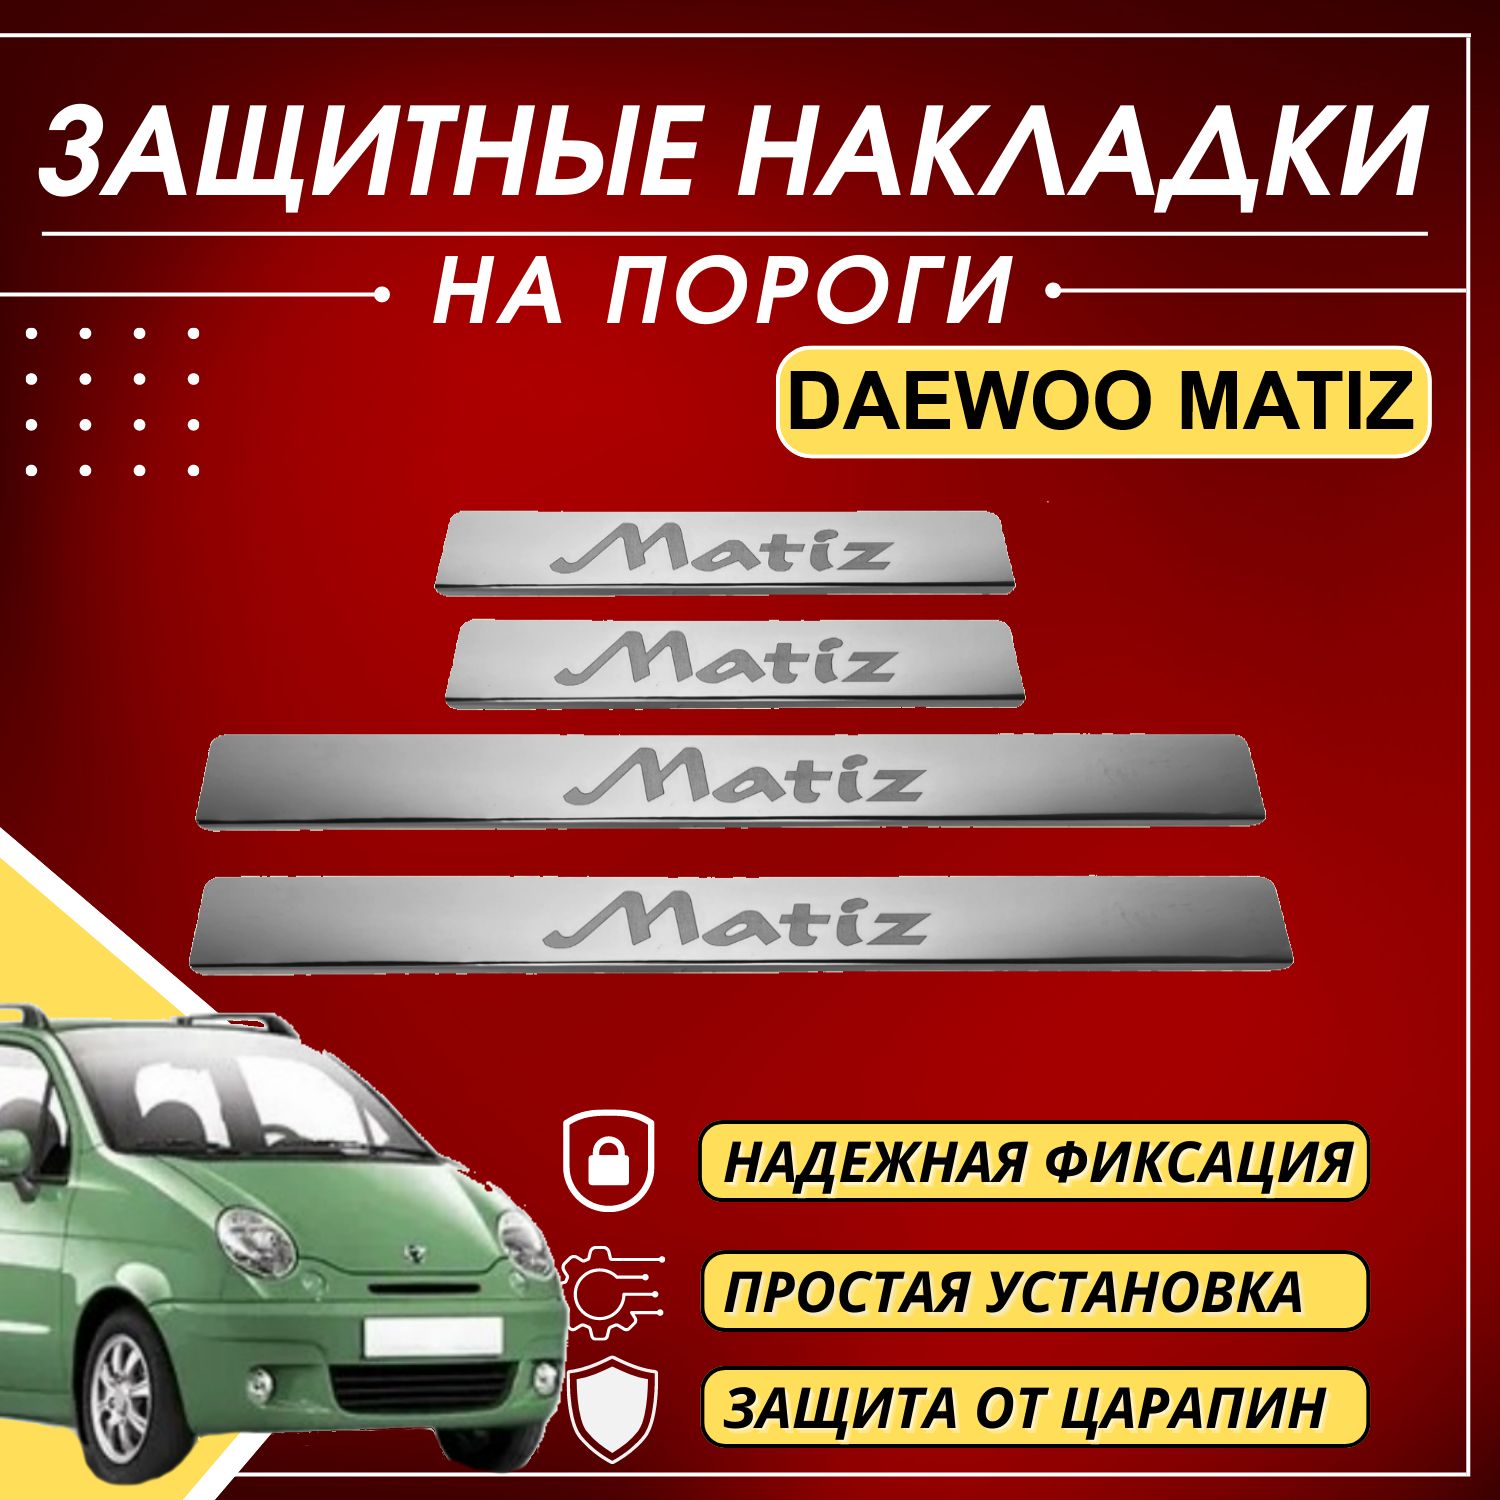 Накладки на передние фары (реснички) Daewoo Matiz 2000-2015